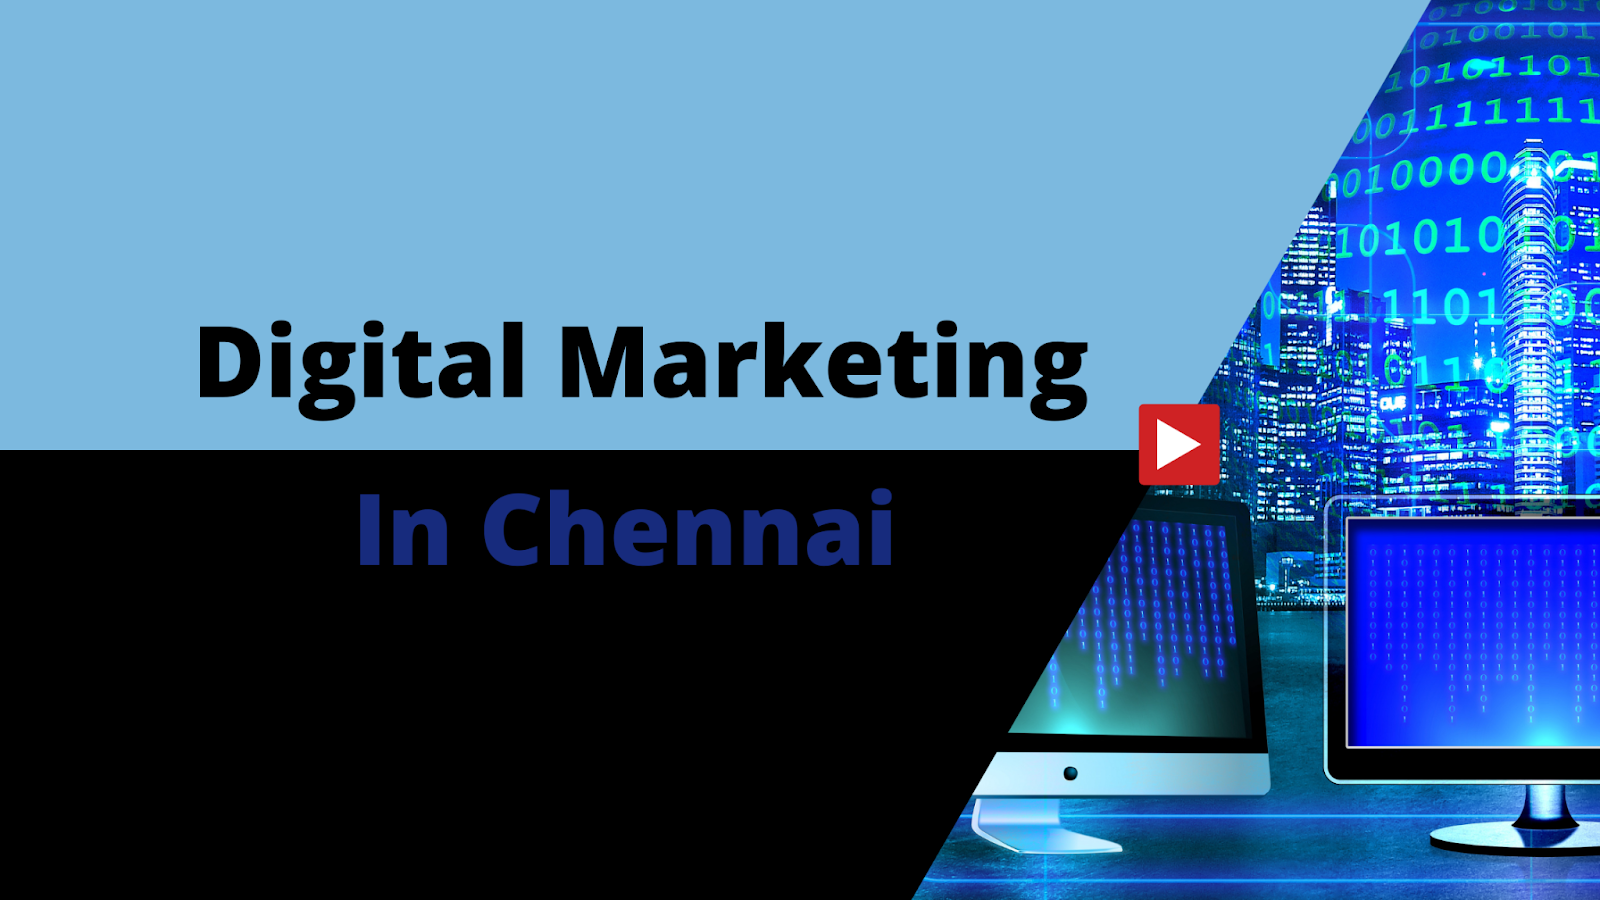 8 Best Digital Marketing Courses in Chennai To Learn Digital Marketing